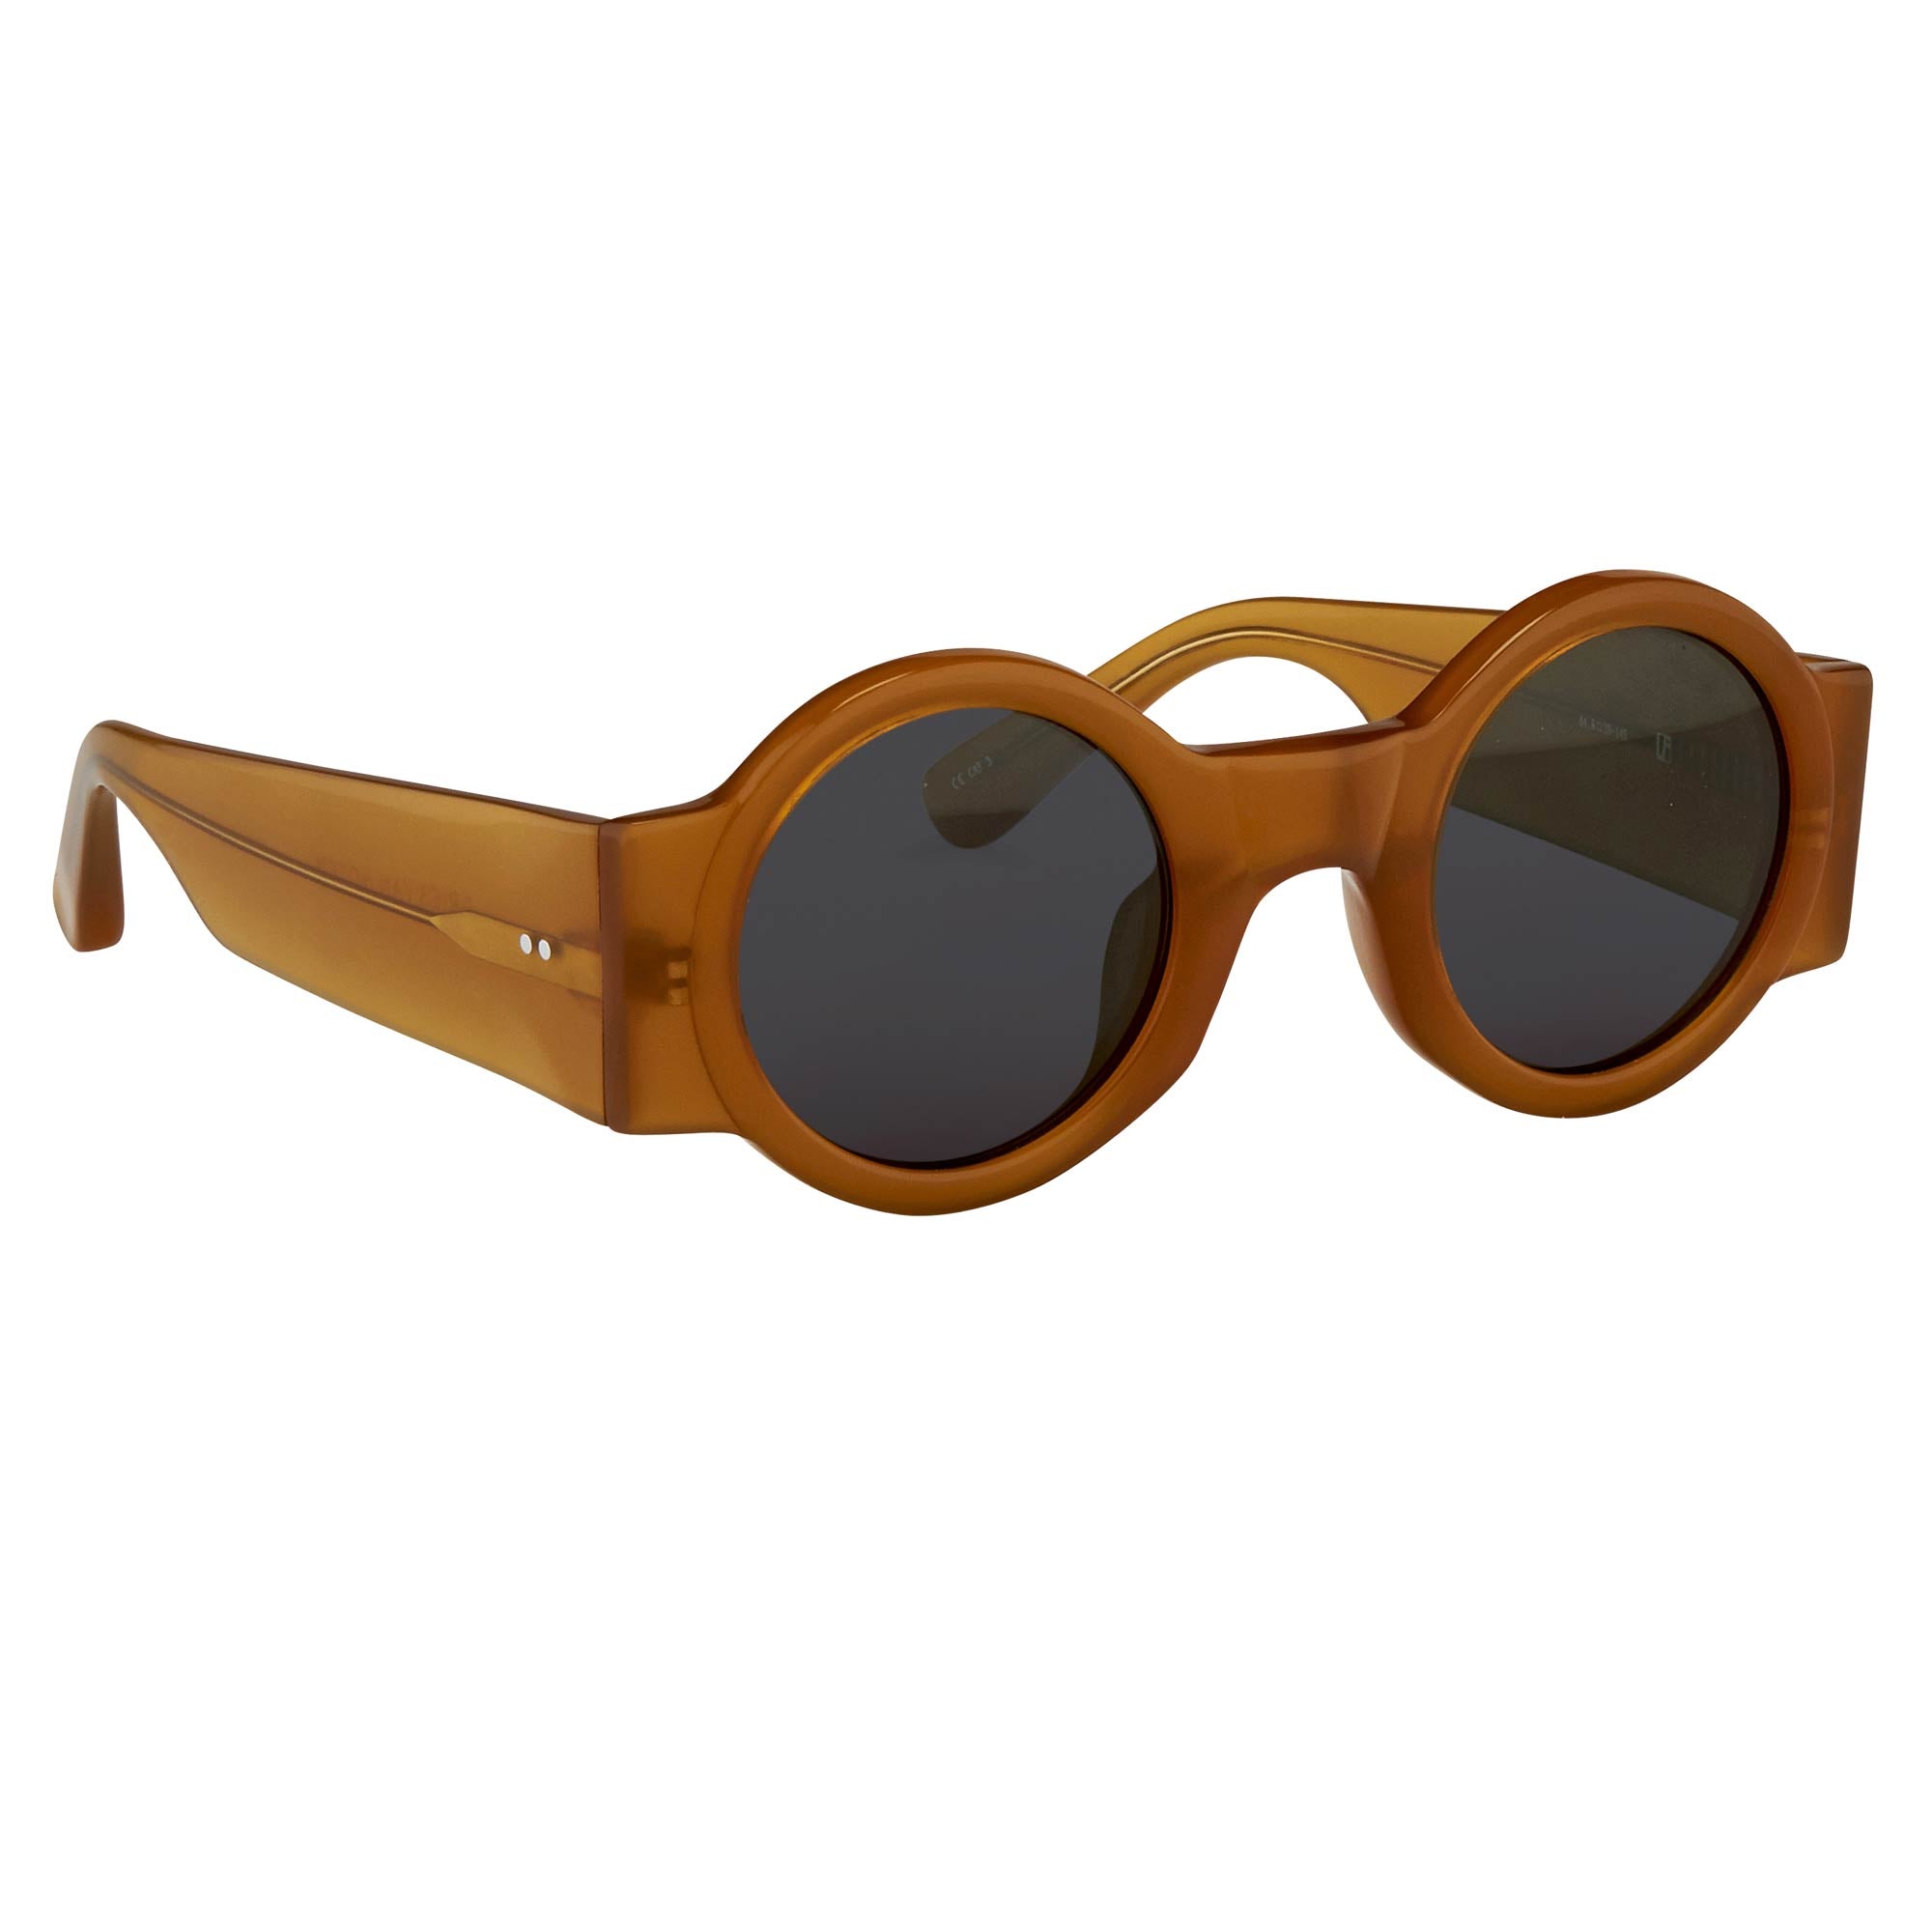 Color_DVN98C1SUN - Dries van Noten 98 C1 Round Sunglasses